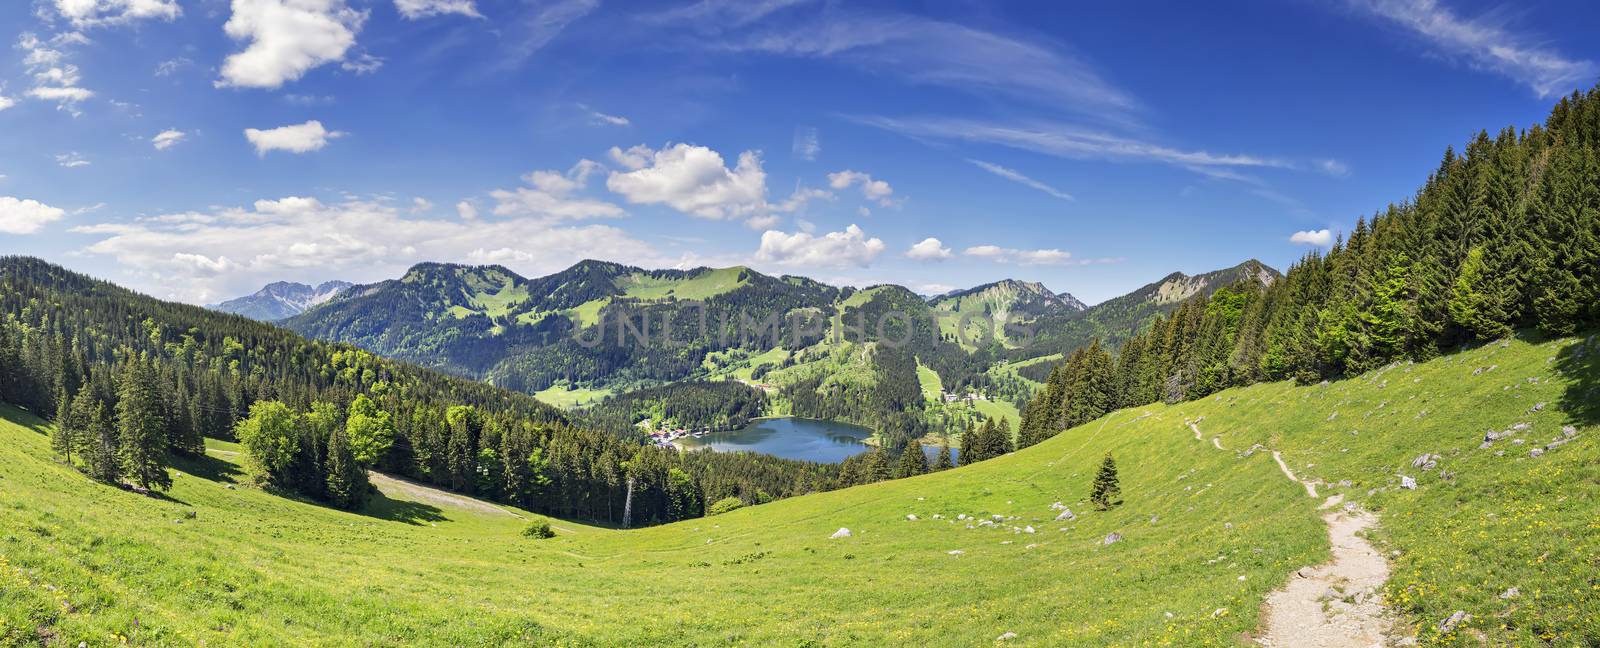 Panorama Jaegerkamp Bavaria Alps by w20er